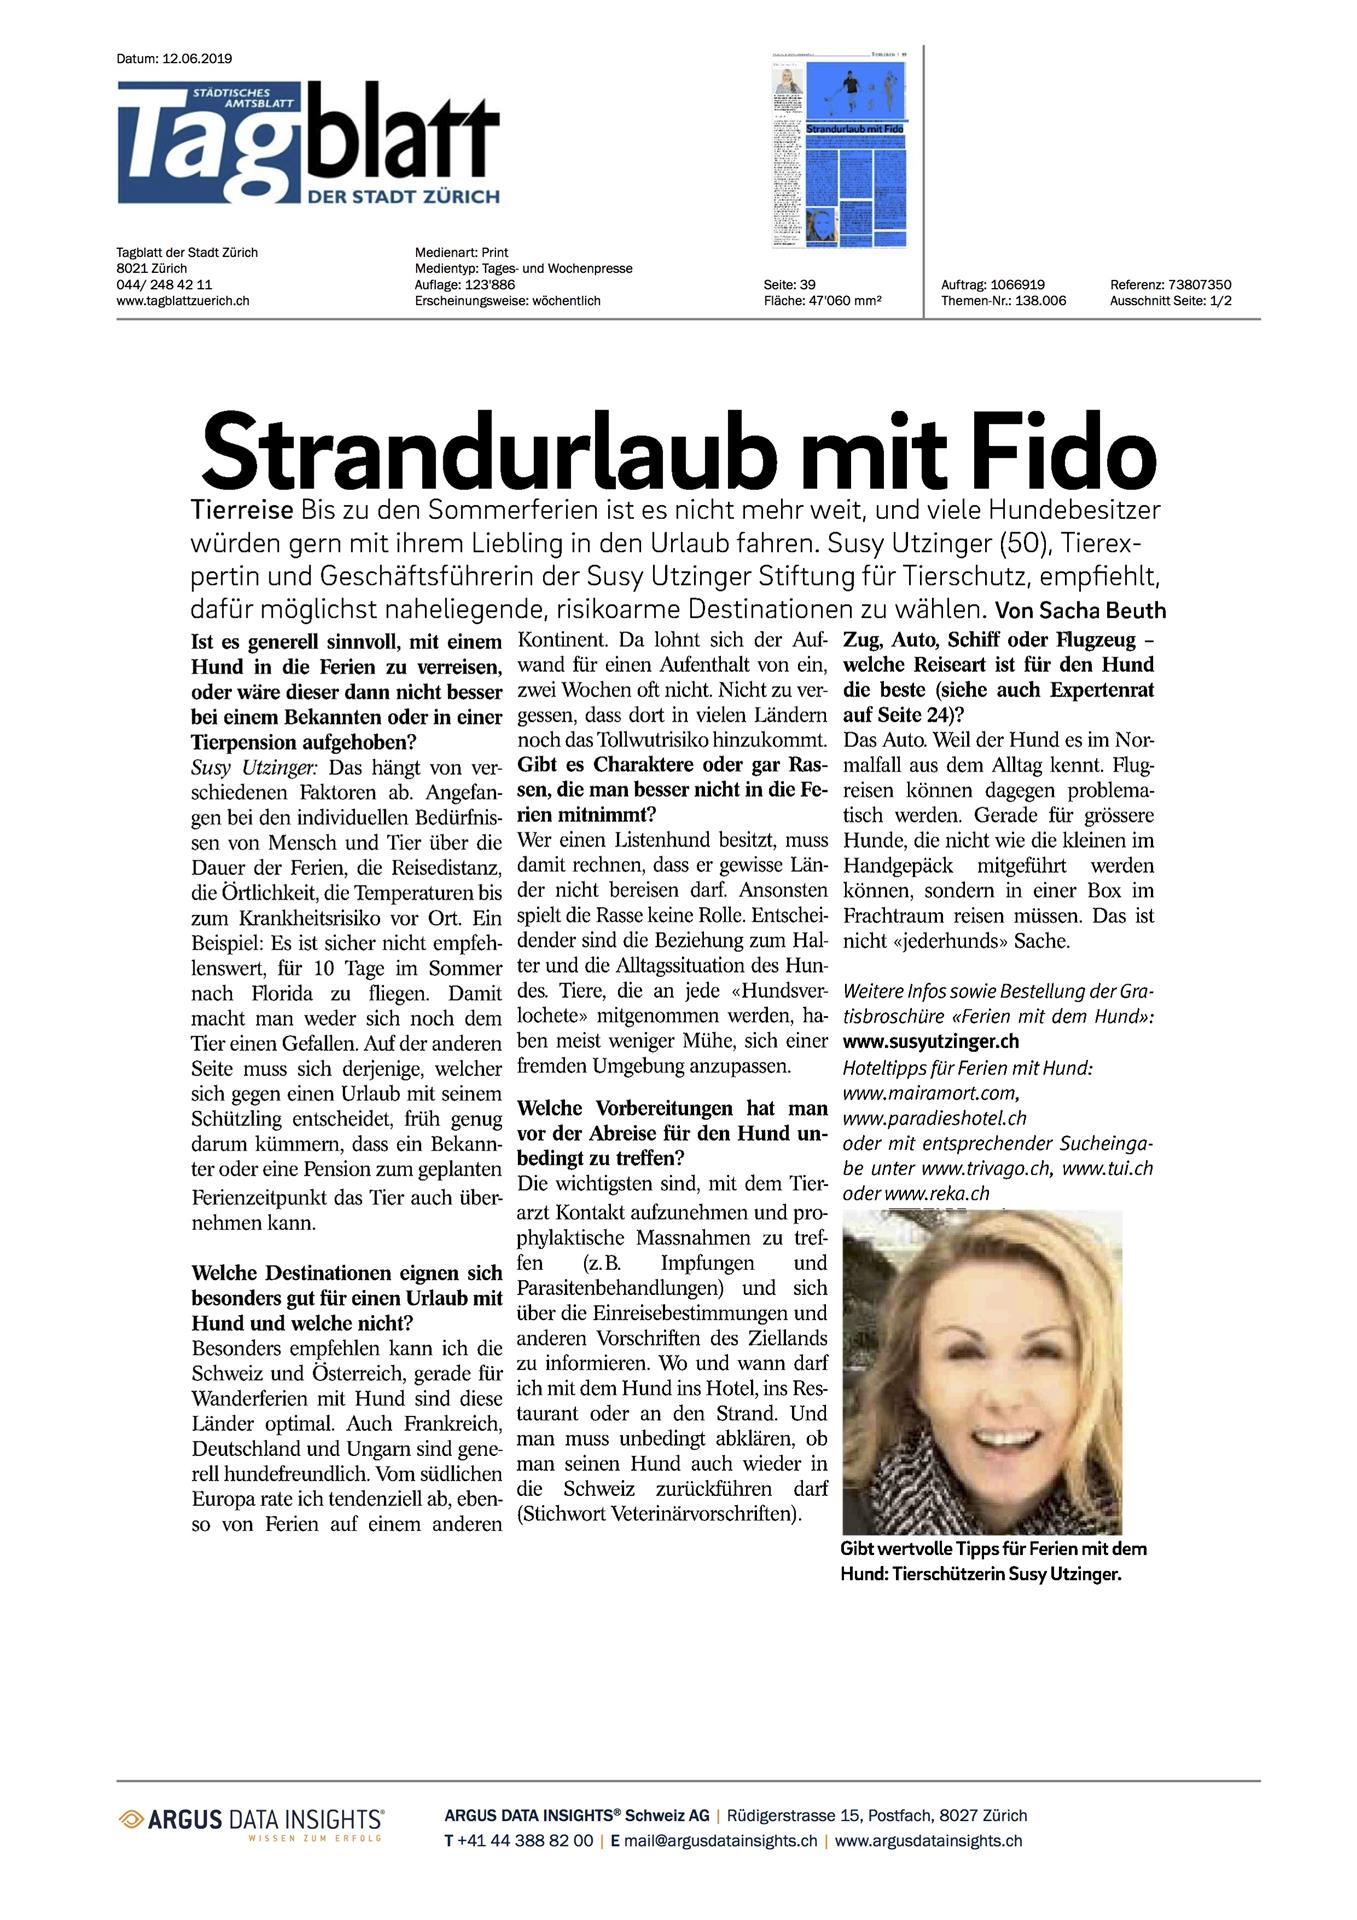 Tagblatt der Stadt Zürich - Juni 2019